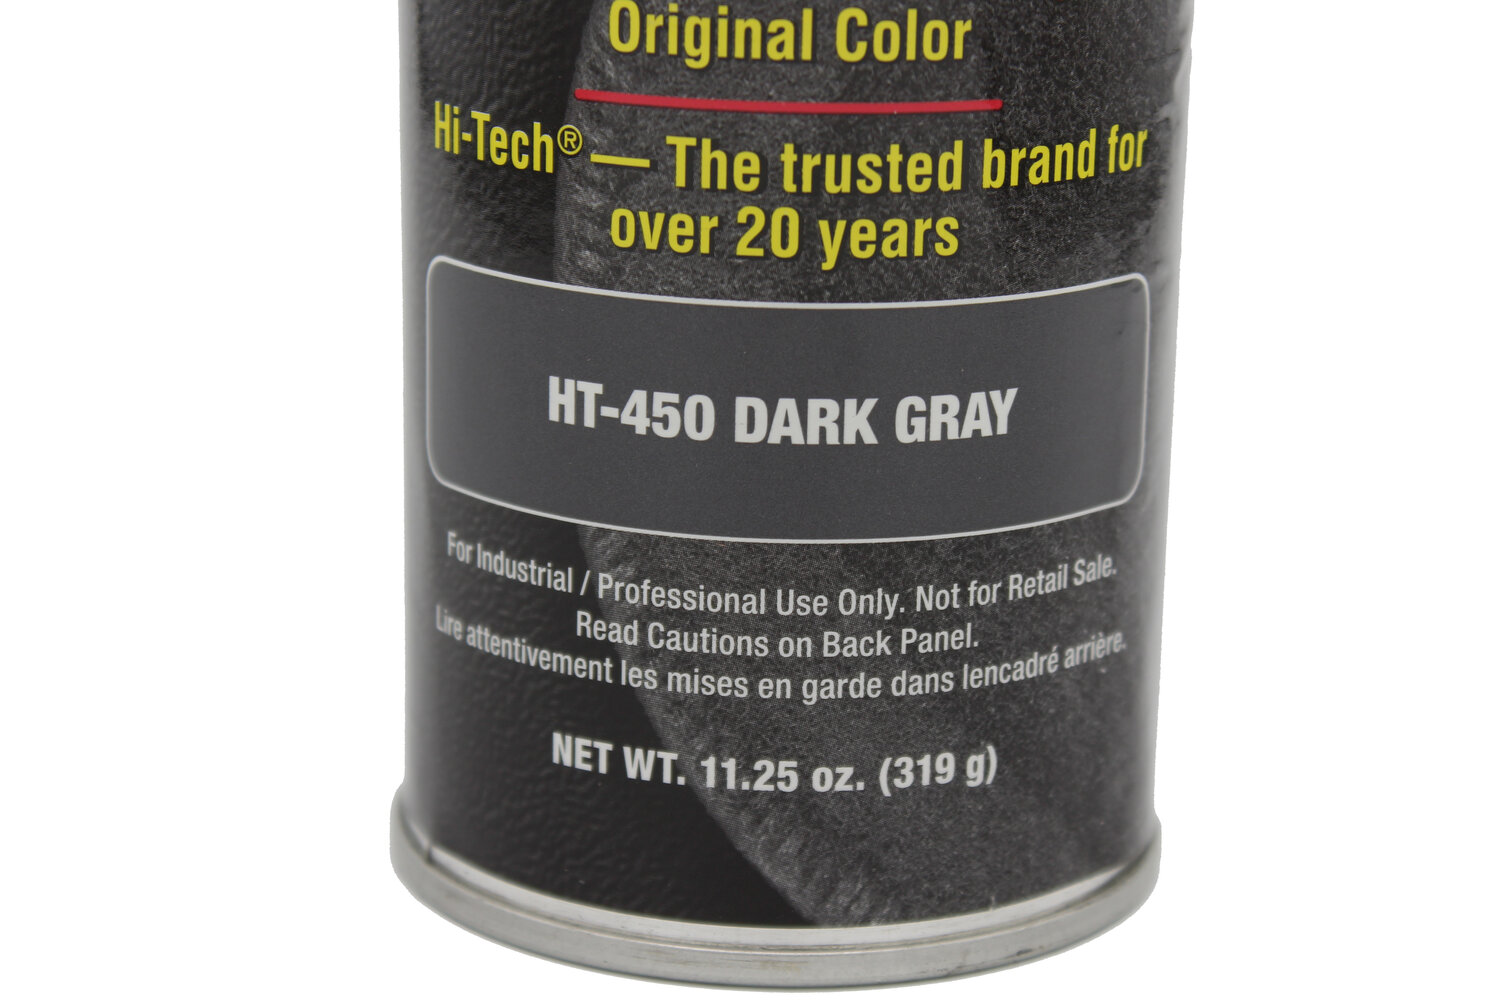 Hi-Tech Industries HT-410 Vinyl Plastic And Carpet Dye - Light Gray –